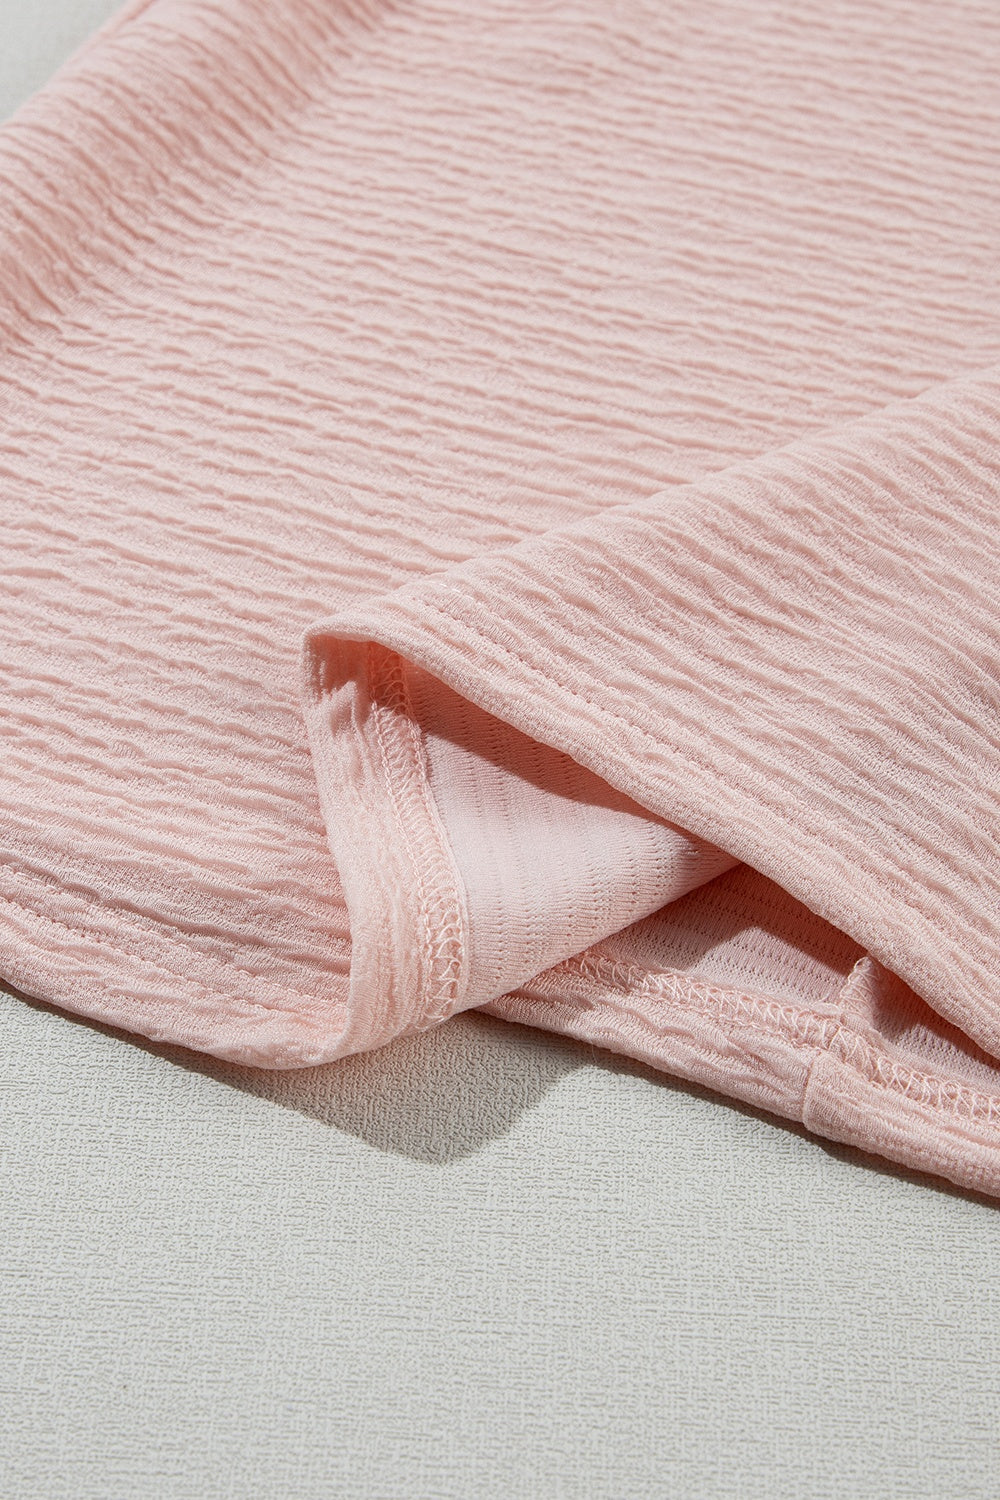 TEEK - Blush Pink Round Neck Frill Short Sleeve Top TOPS TEEK Trend   